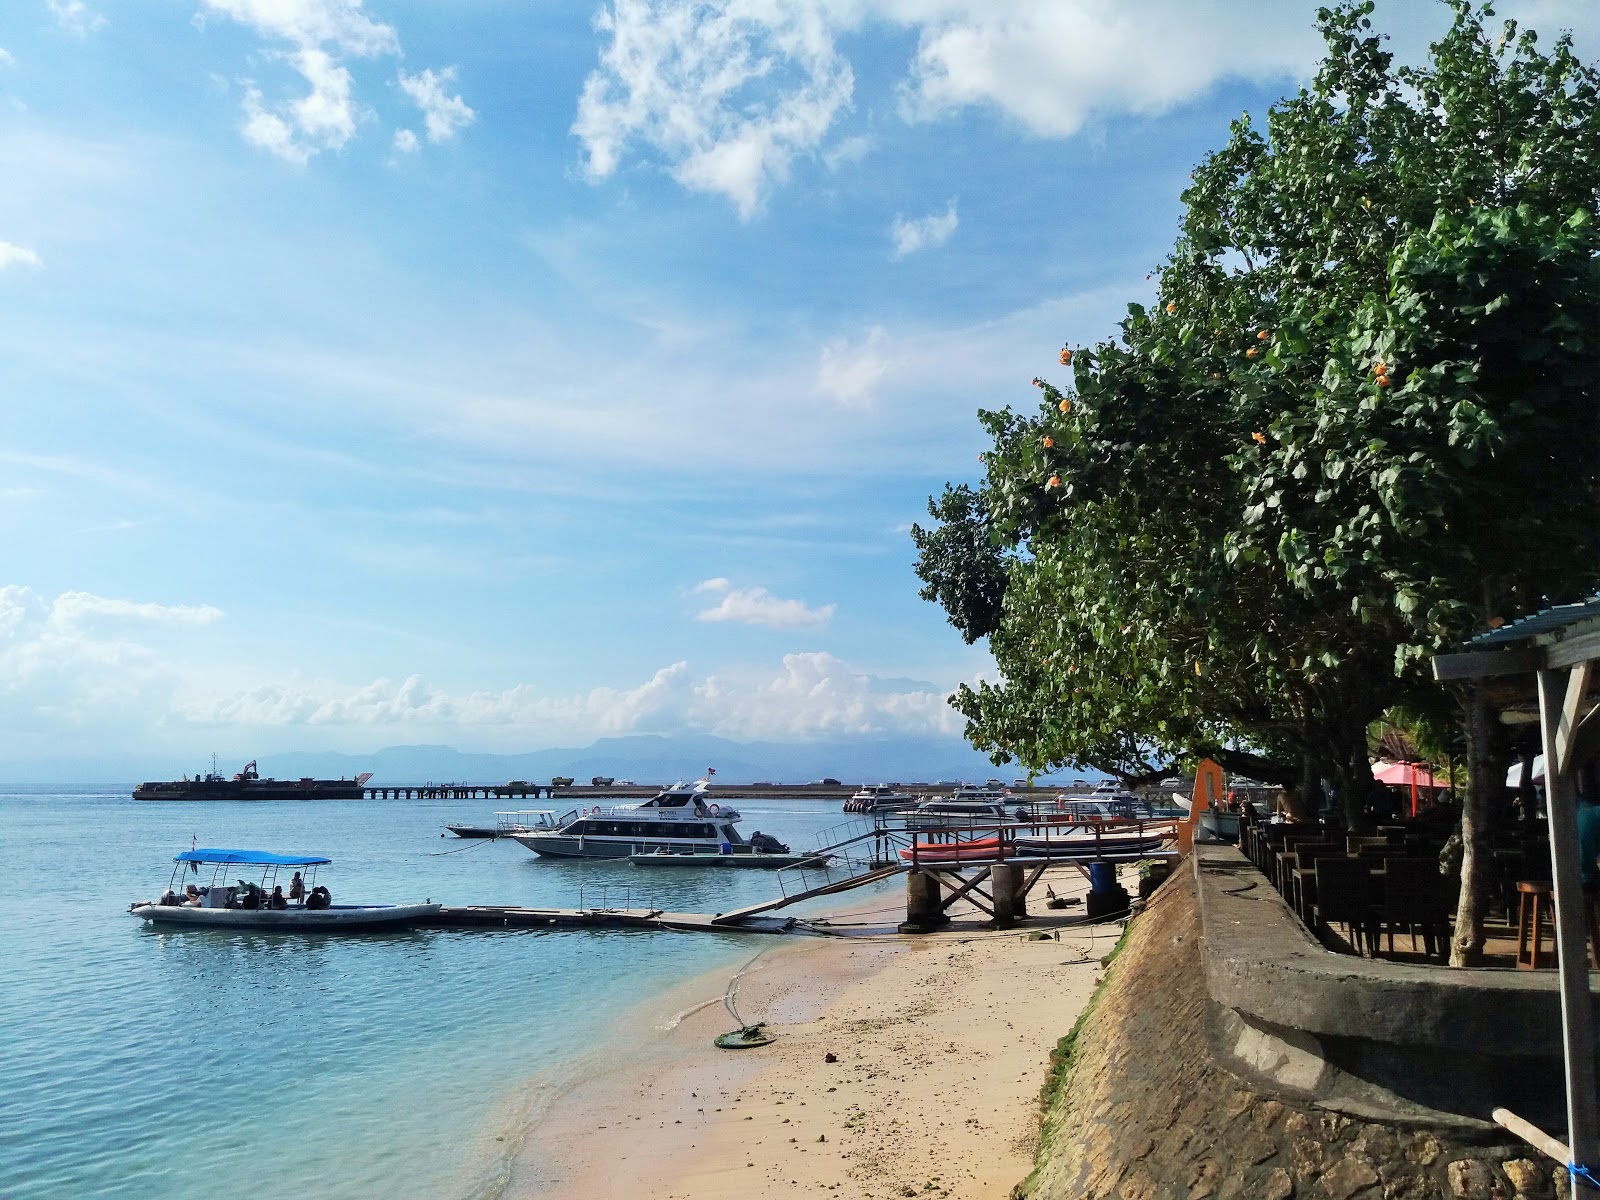 Photo of Toya Paken Beach - popular place among relax connoisseurs